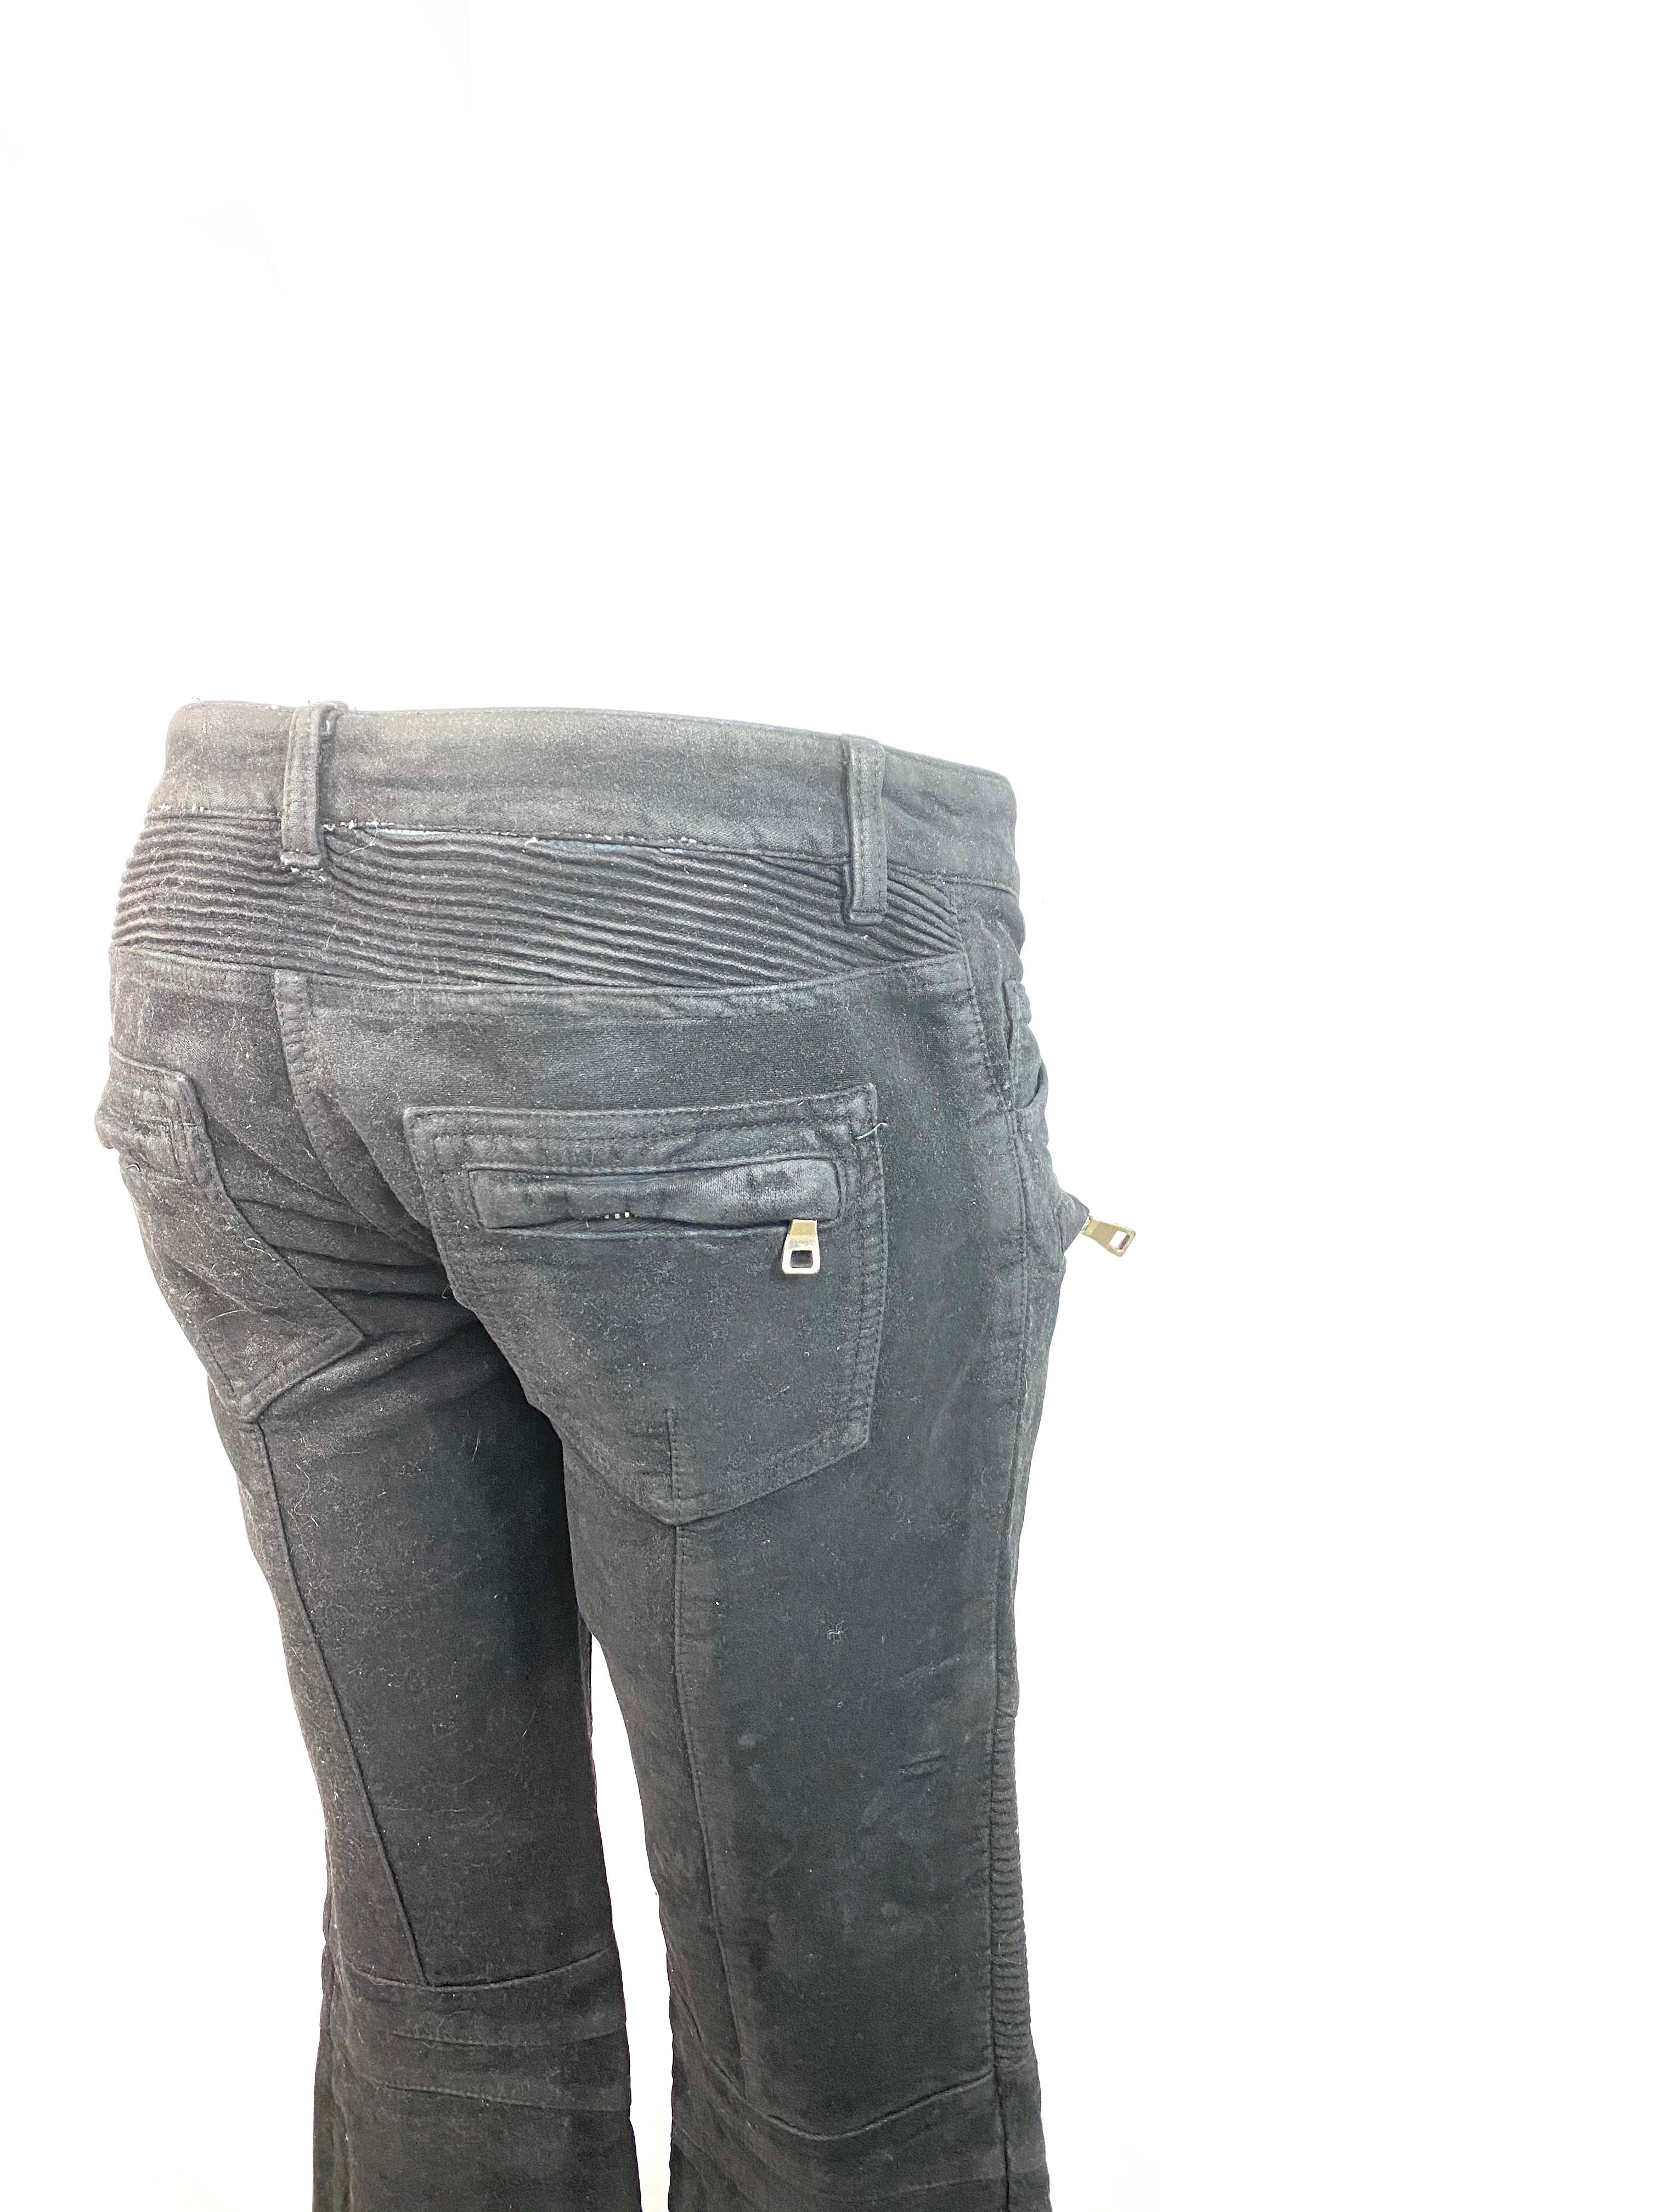 Balmain Black Suede Flare Jeans Pant Size 40 For Sale 1